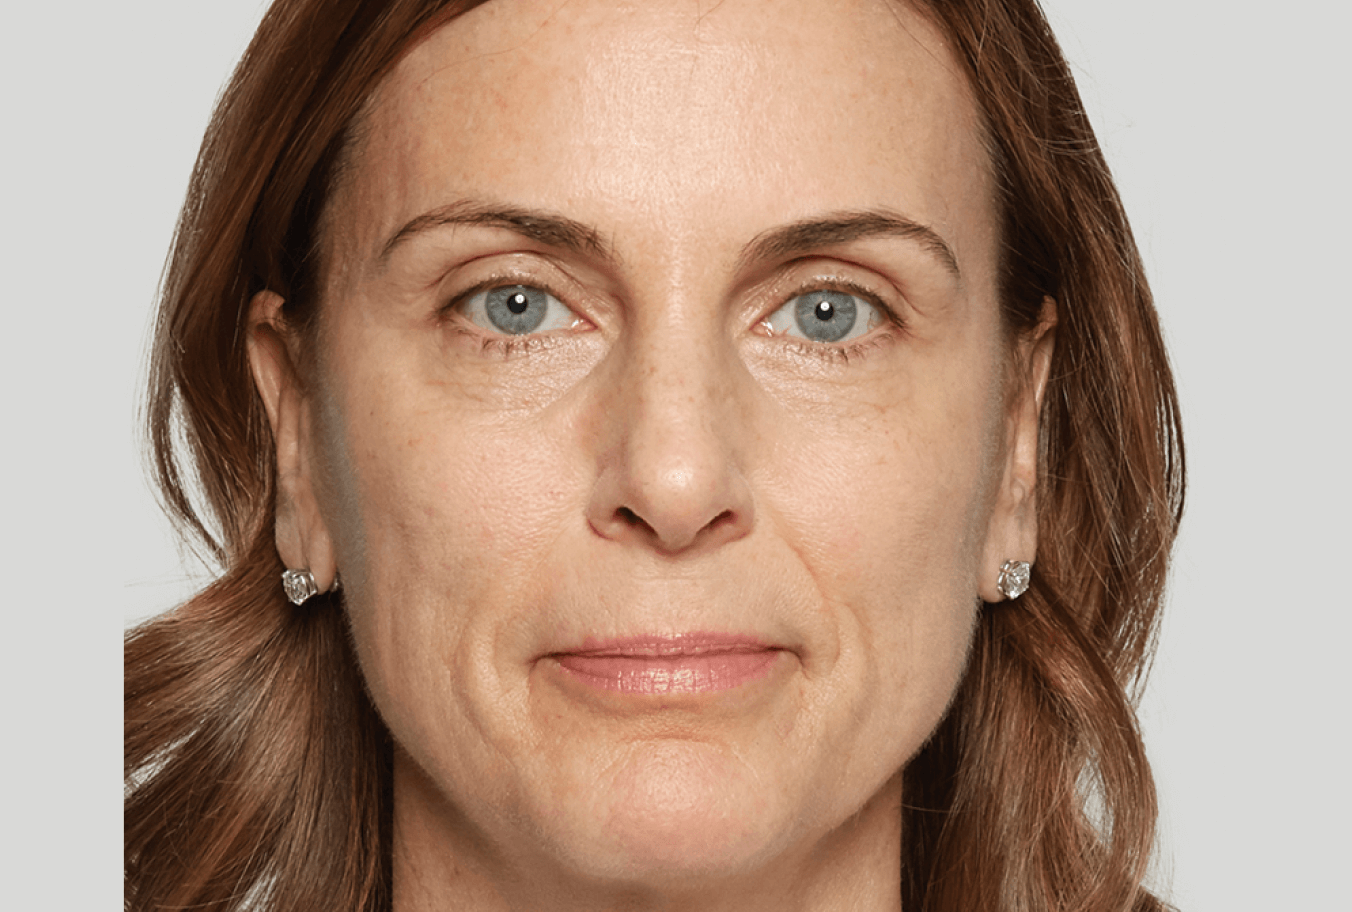 a close up of a woman 's face without makeup after Sculptra treatment